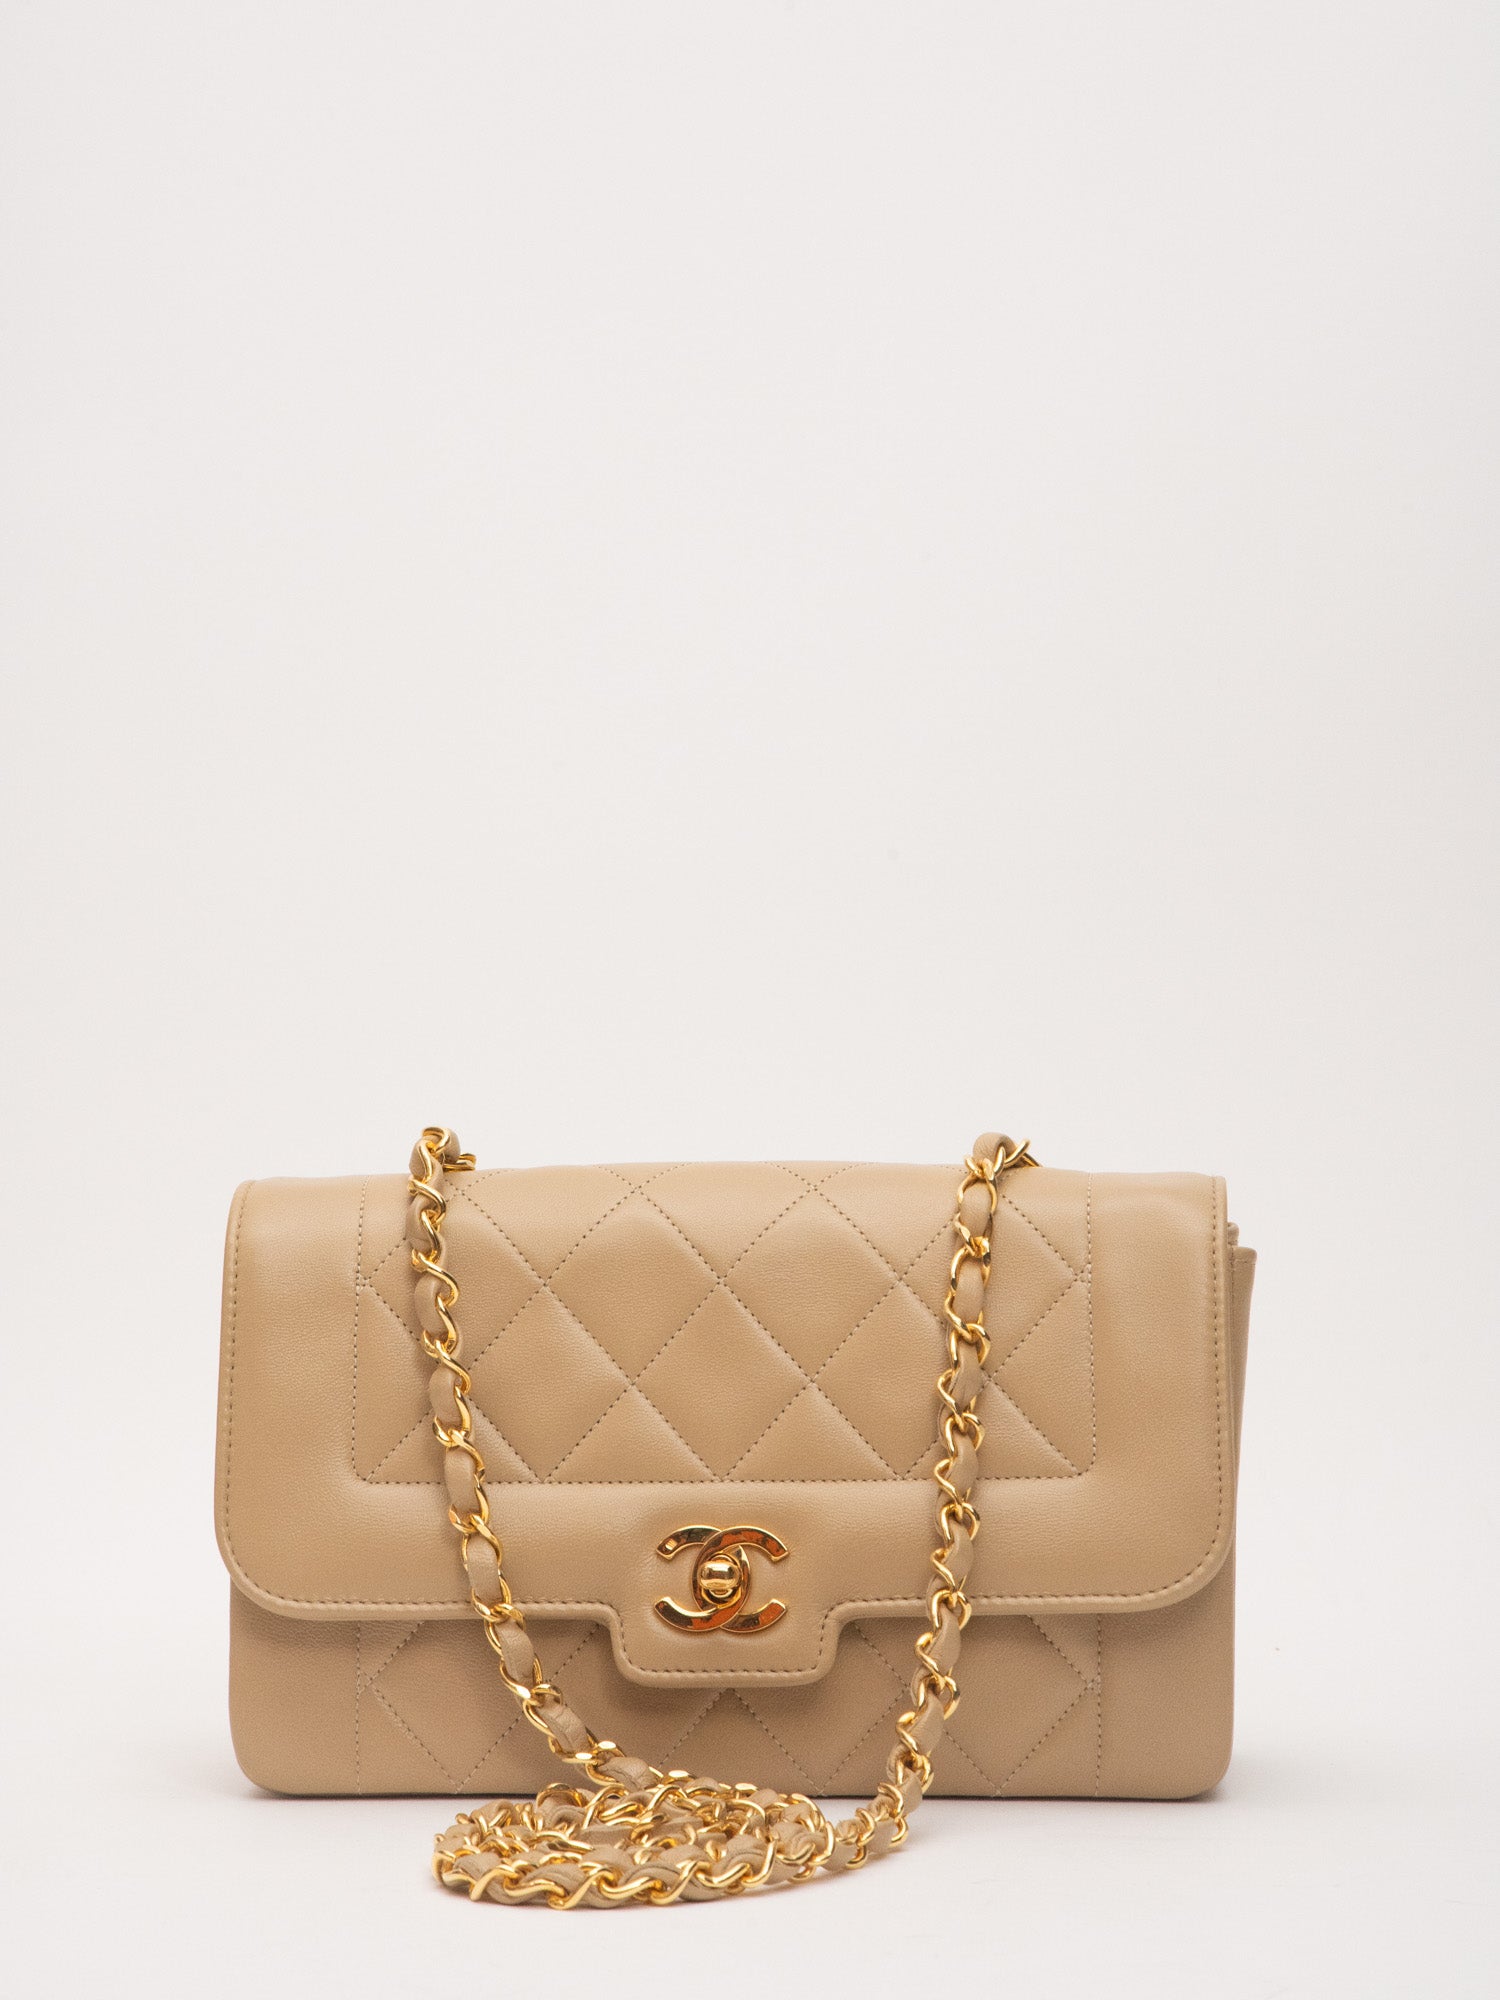 Chanel Classic Lambskin Beige Tan Bag 